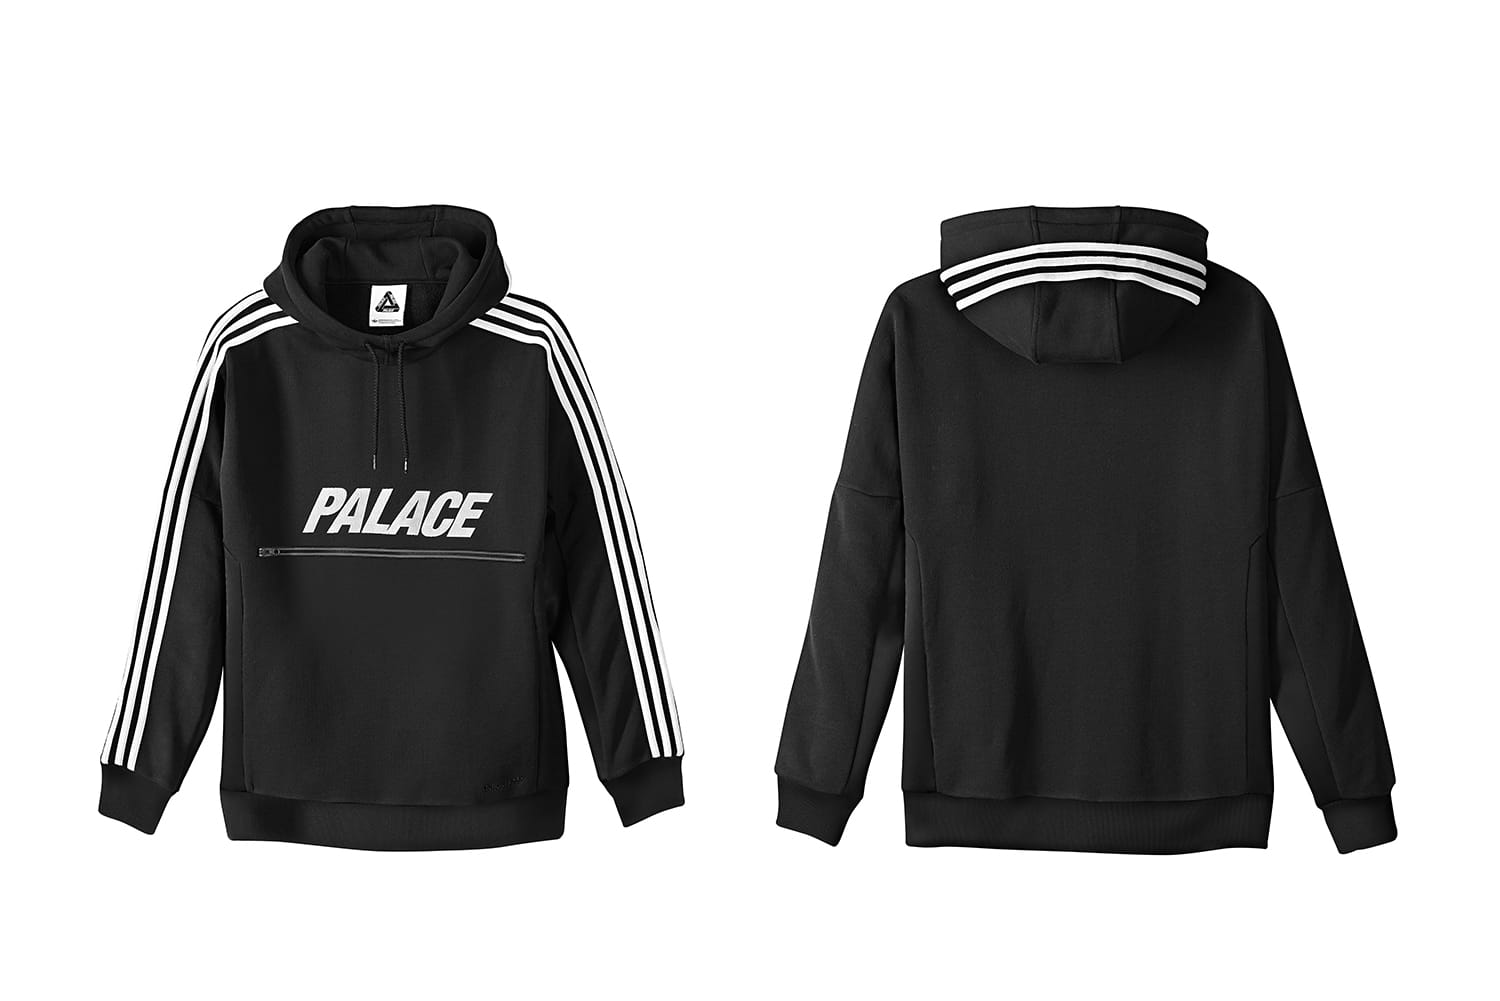 palace x adidas track top